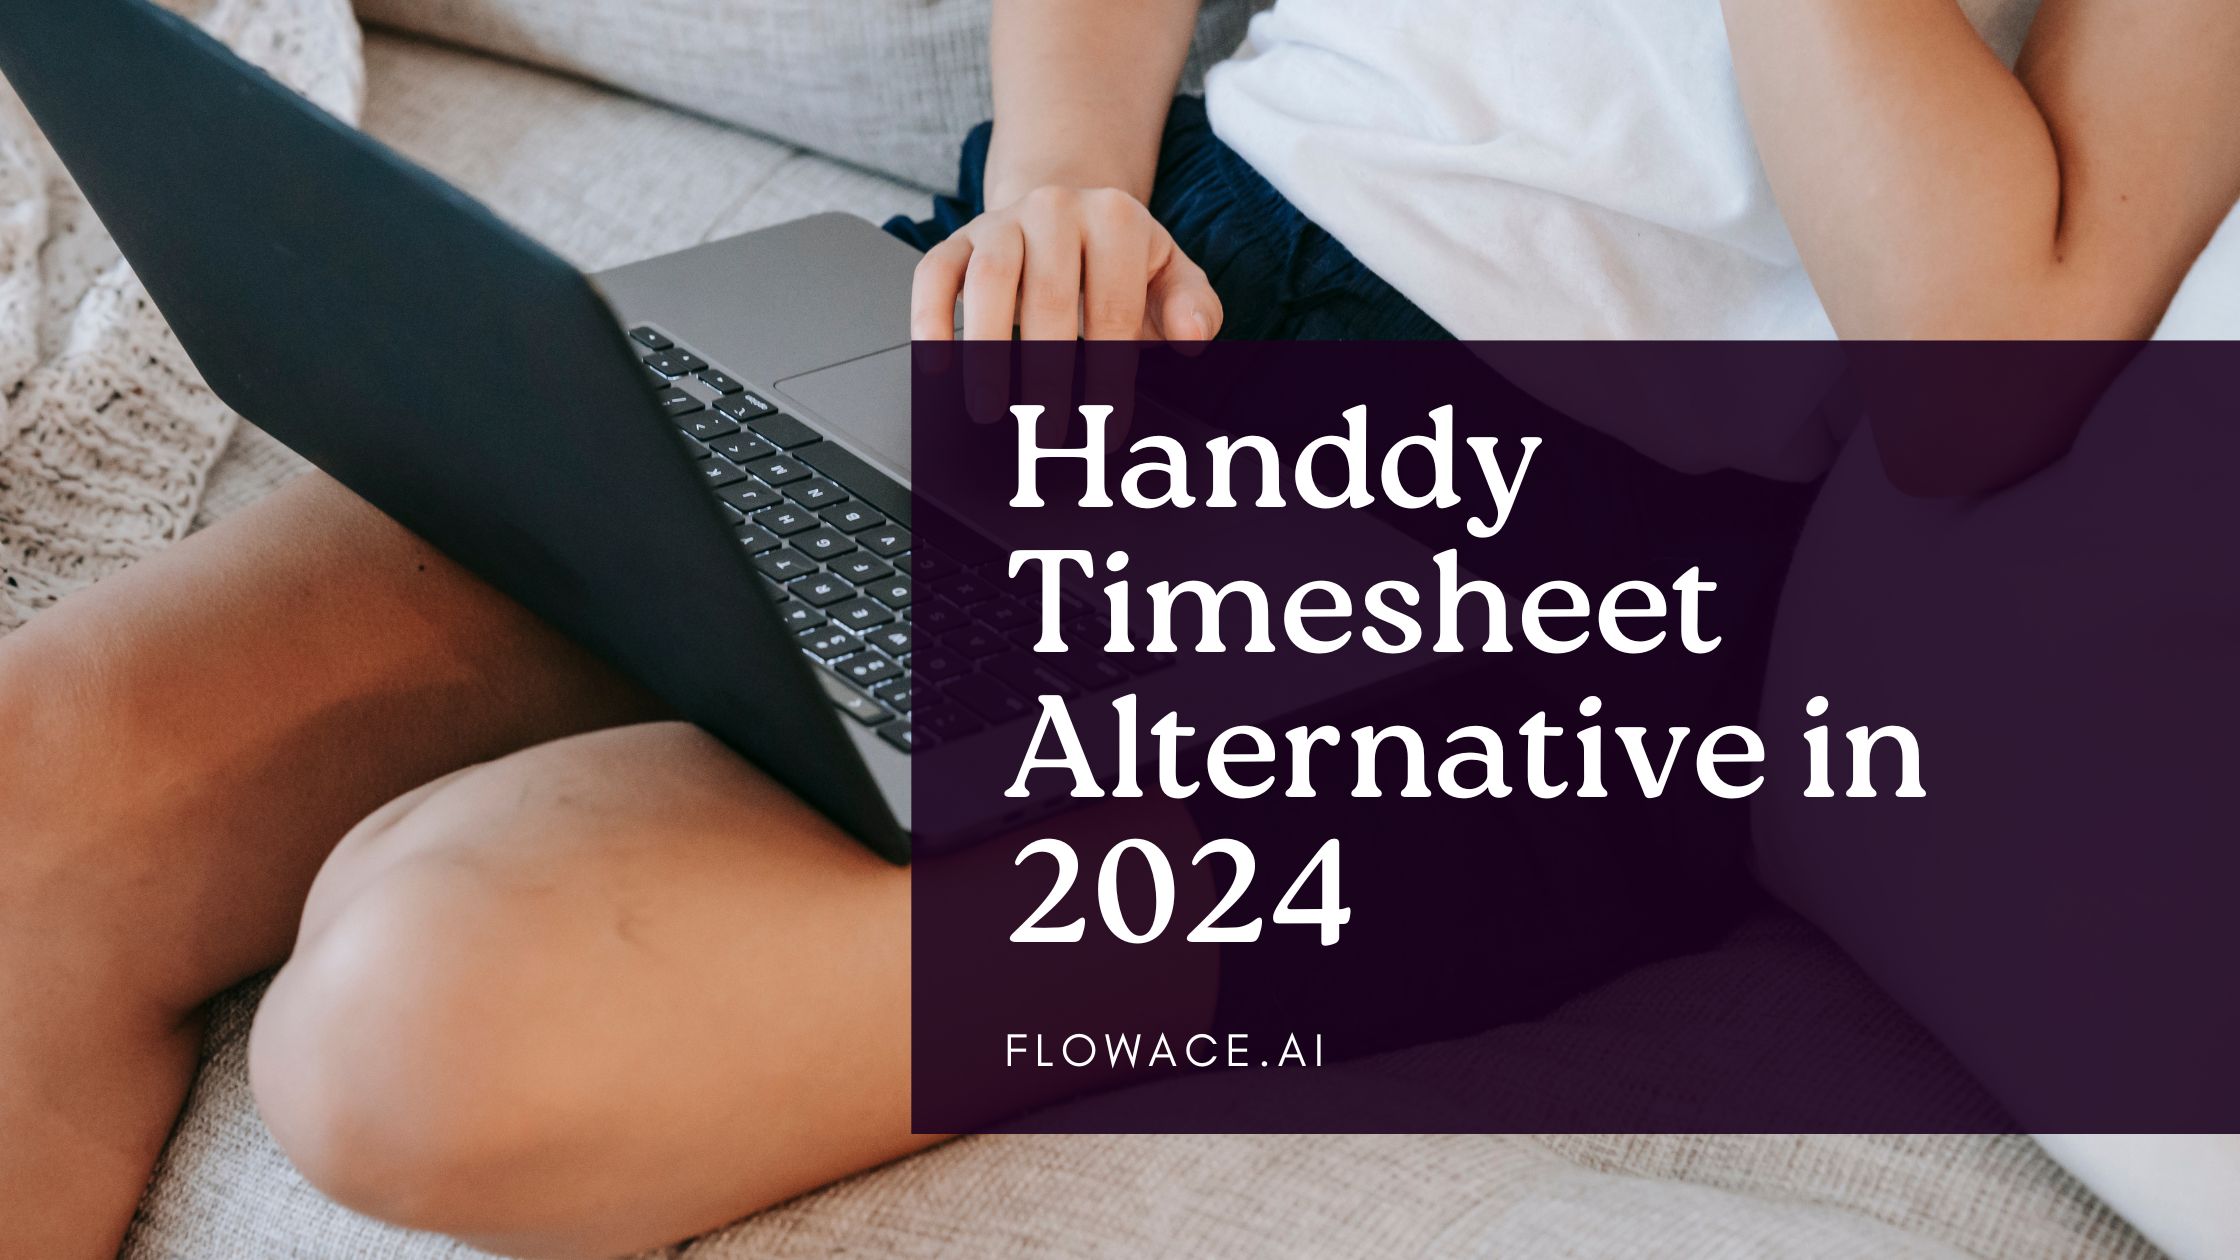 Handdy Timesheet Alternative in 2024